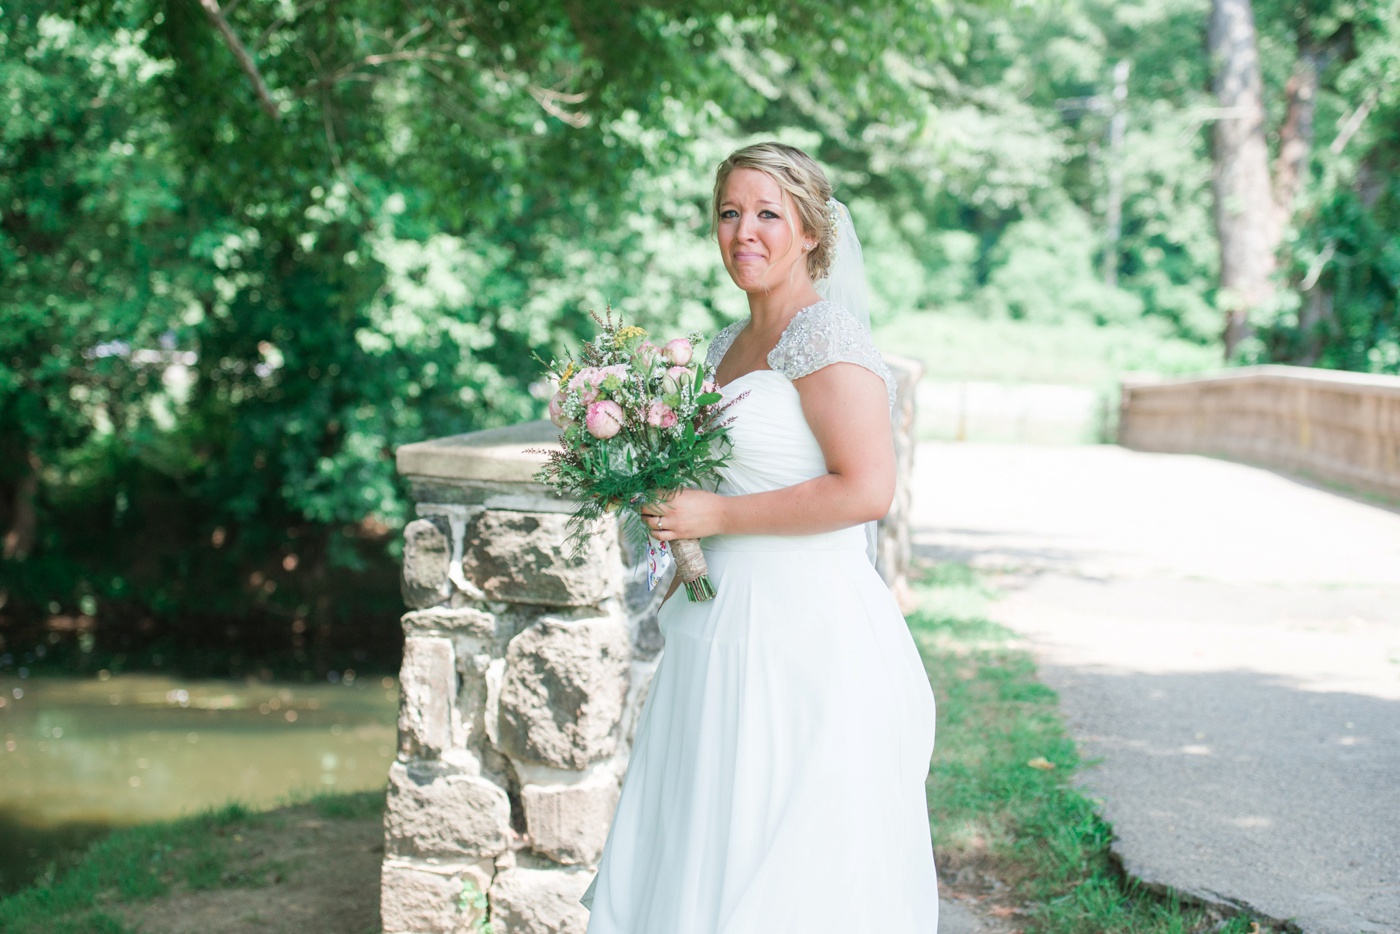 Kristen + John - Reading Pennsylvania Wedding Photographer - Alison Dunn Photography photo-32